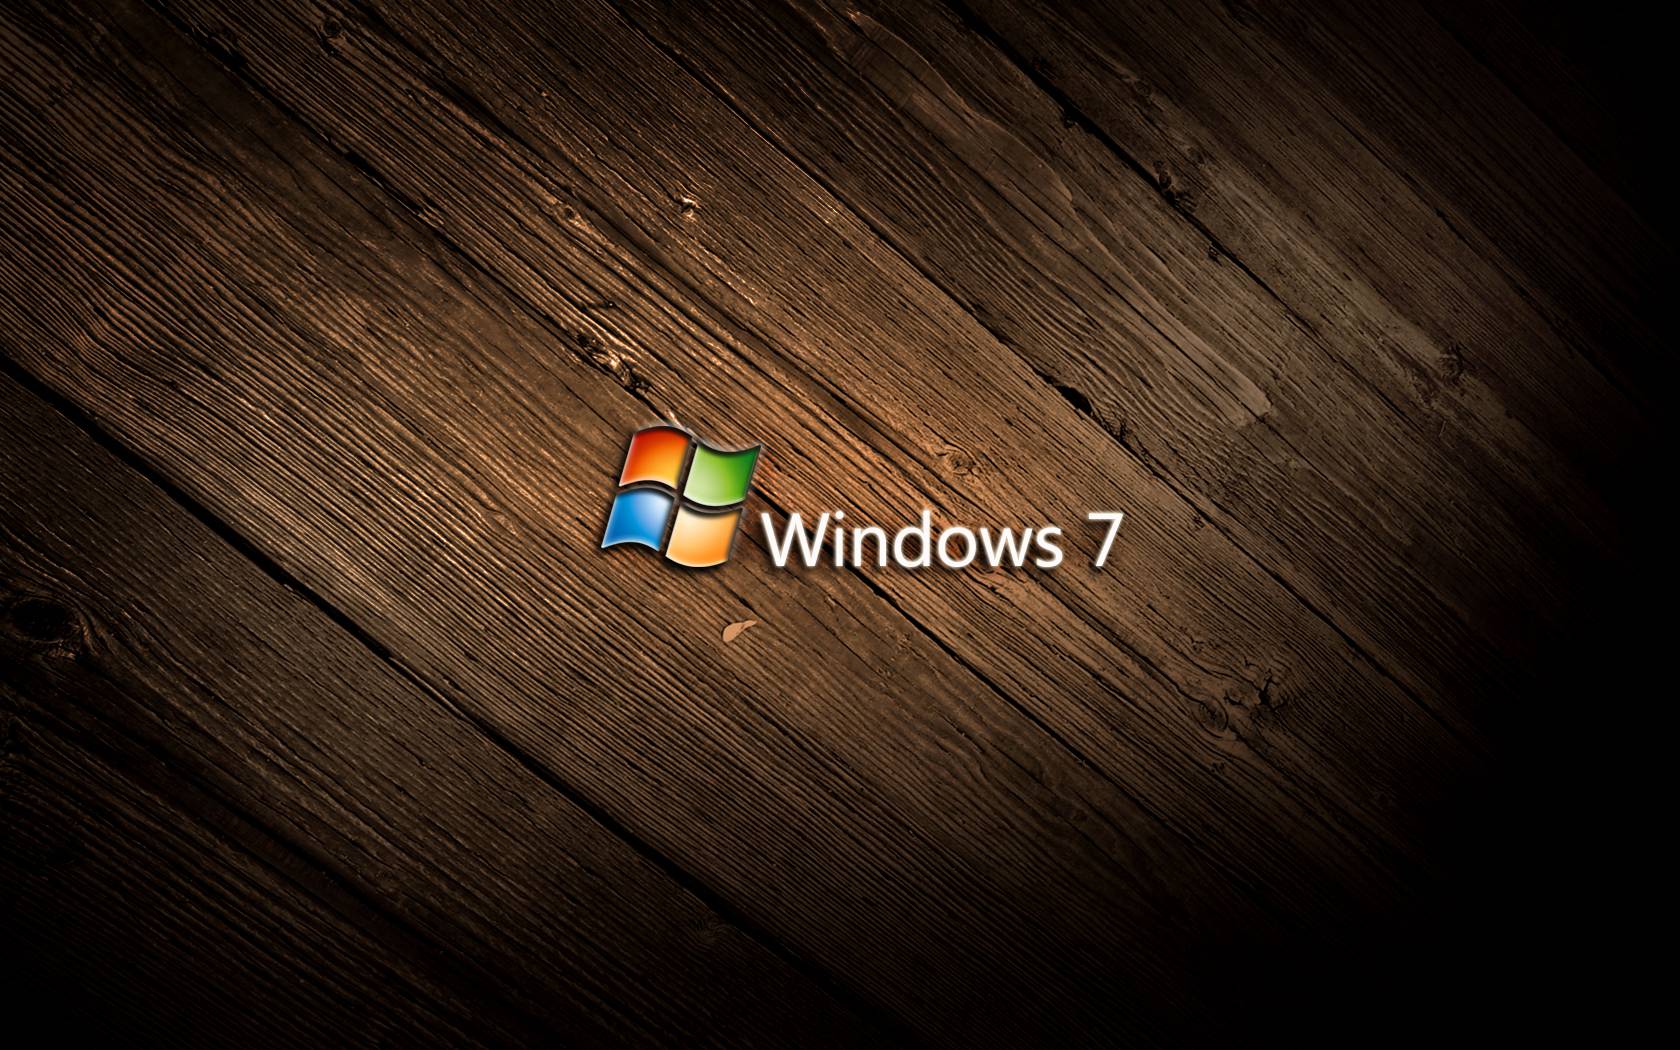 Windows 7 Wallpaper HD Free Download